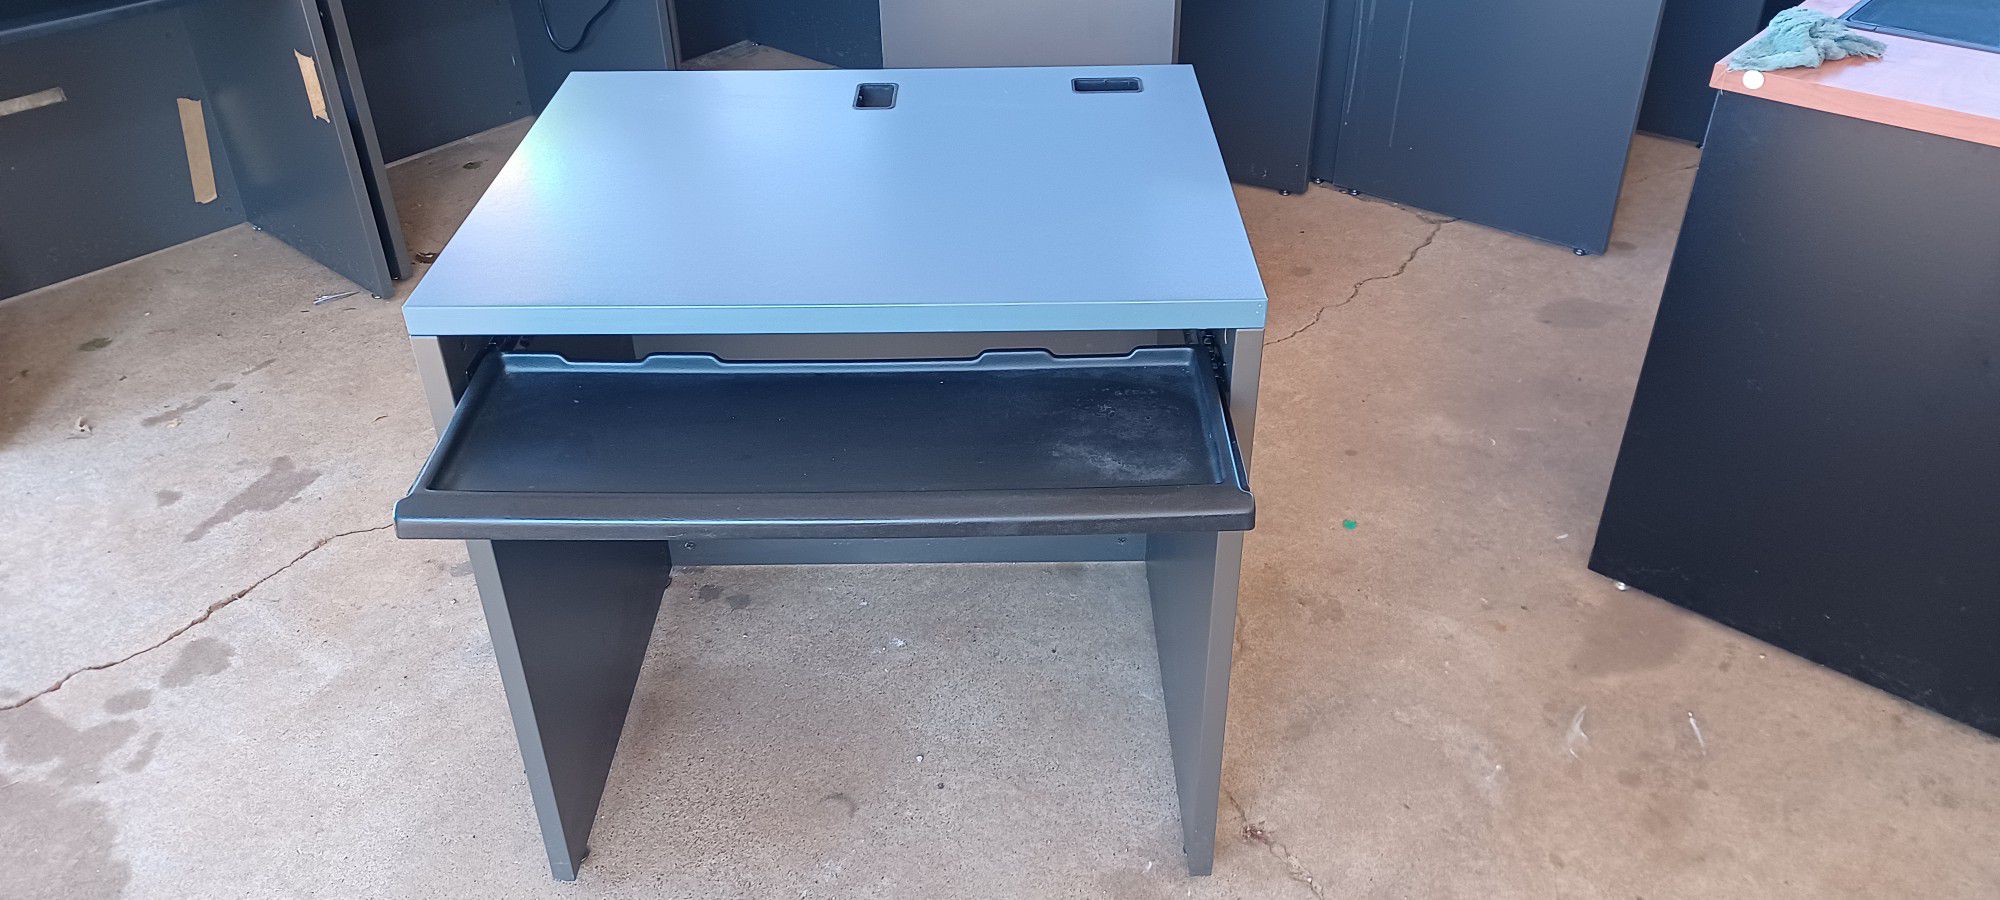 Computer Desk Blue and Black